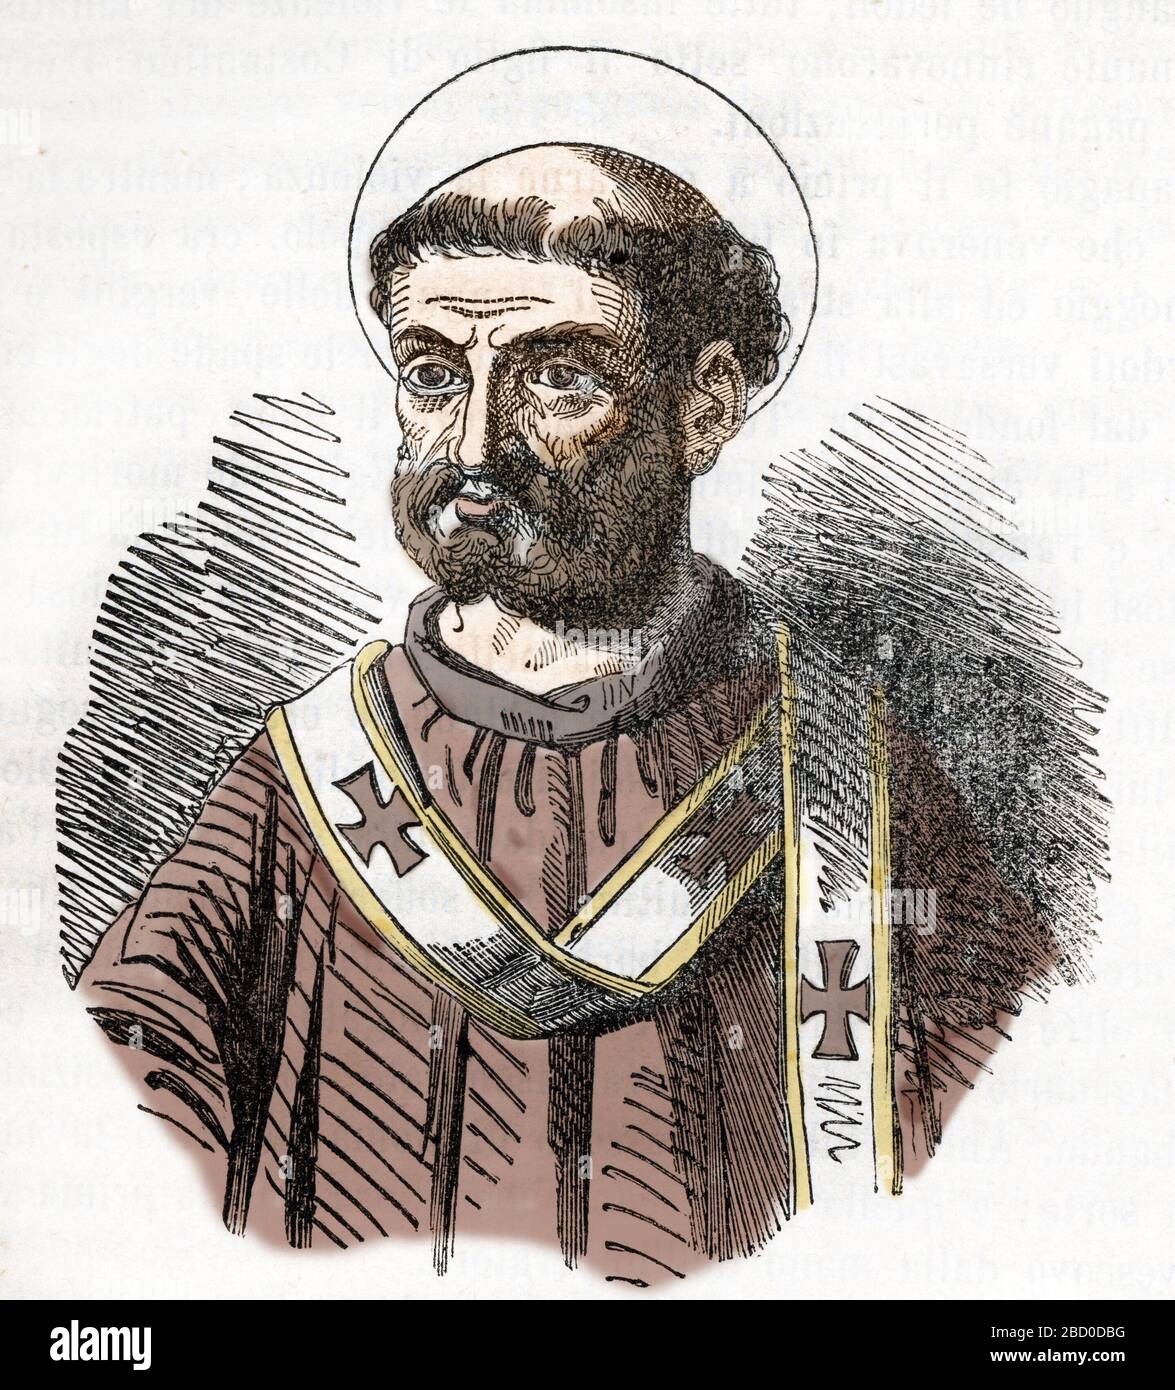 Portrait du pape Libere (Liberius) (352-366) Gravure tiree de 'I misteri del vaticano' de Franco Mistrali 1843 Collection privee Stock Photo